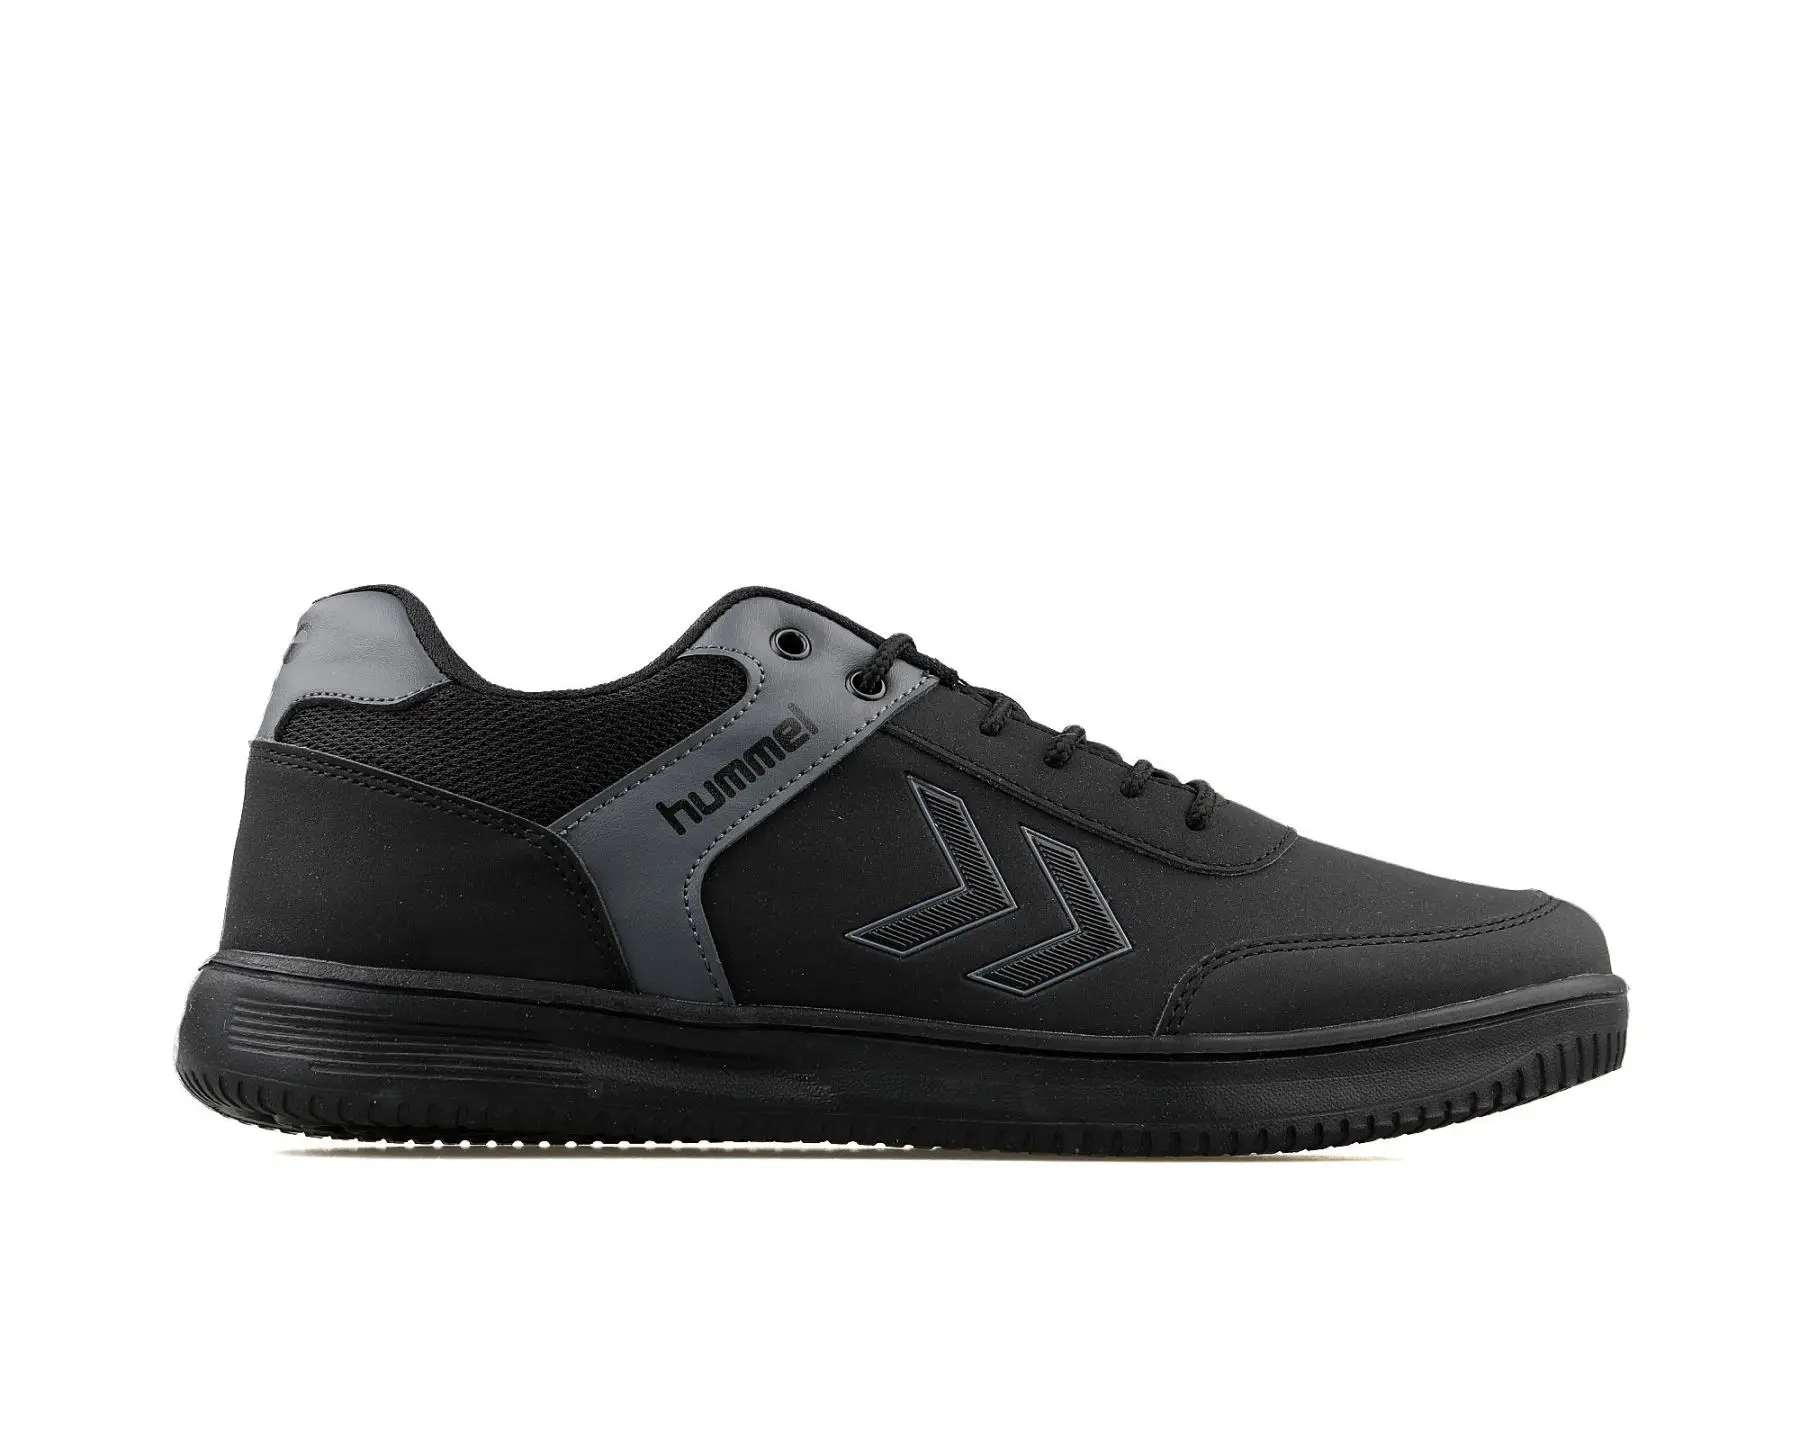 Hummel Original men's Sneakers Casual Sneakers Black Color Casual Running Casual Walking Shoes Hml Access